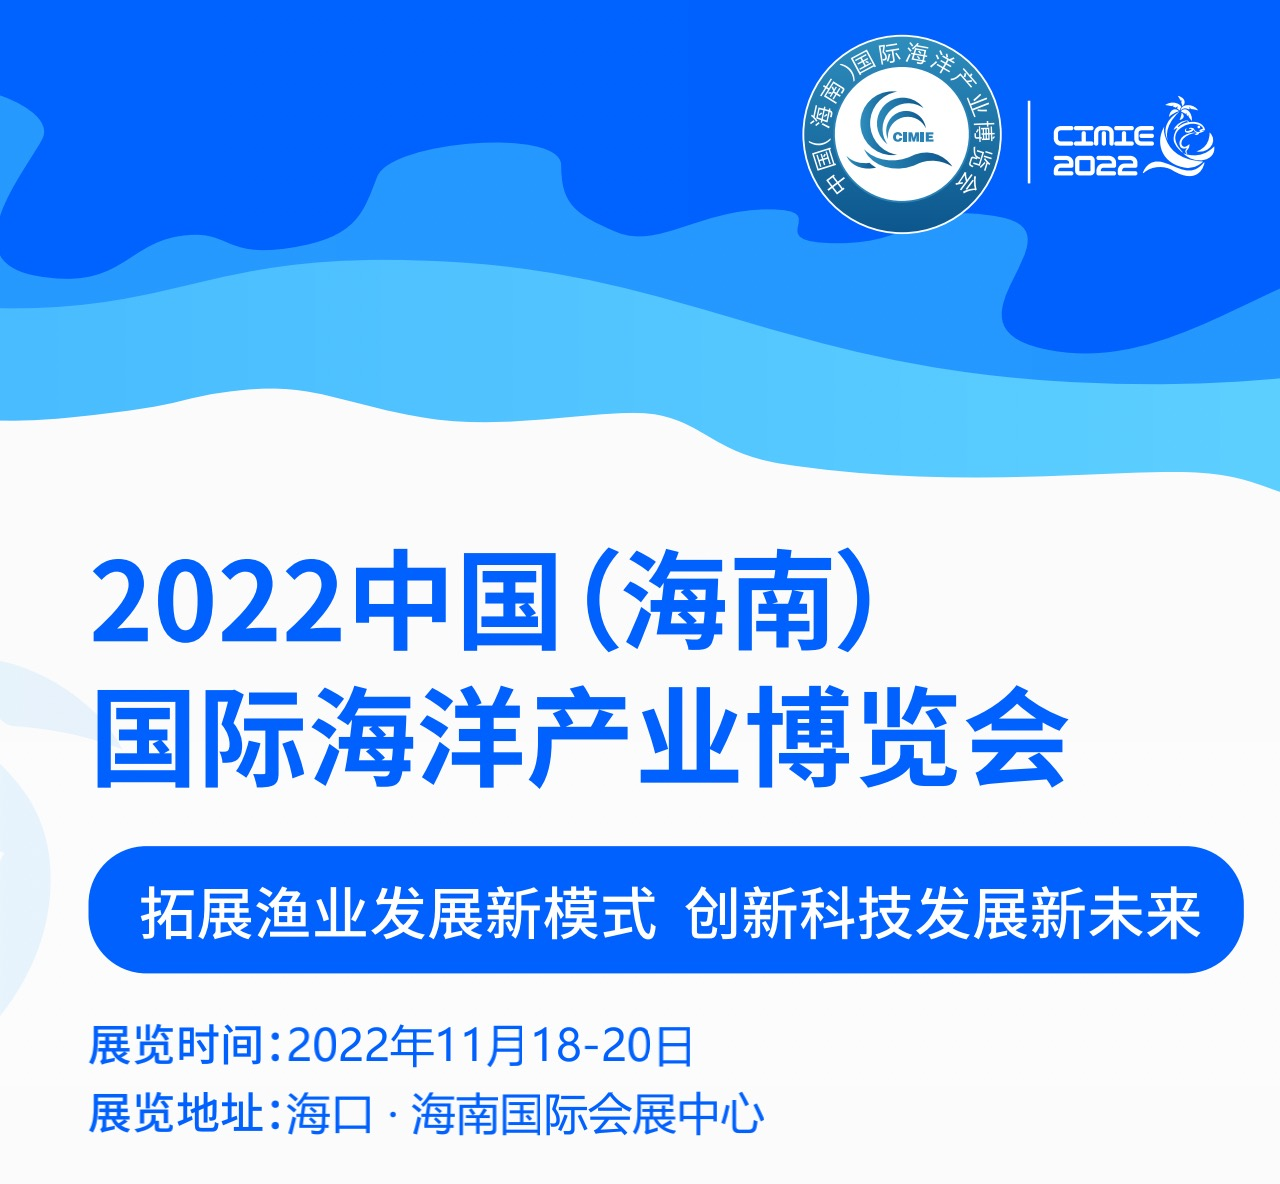 2022 Sina (Hainan) International Marine Industry Expo